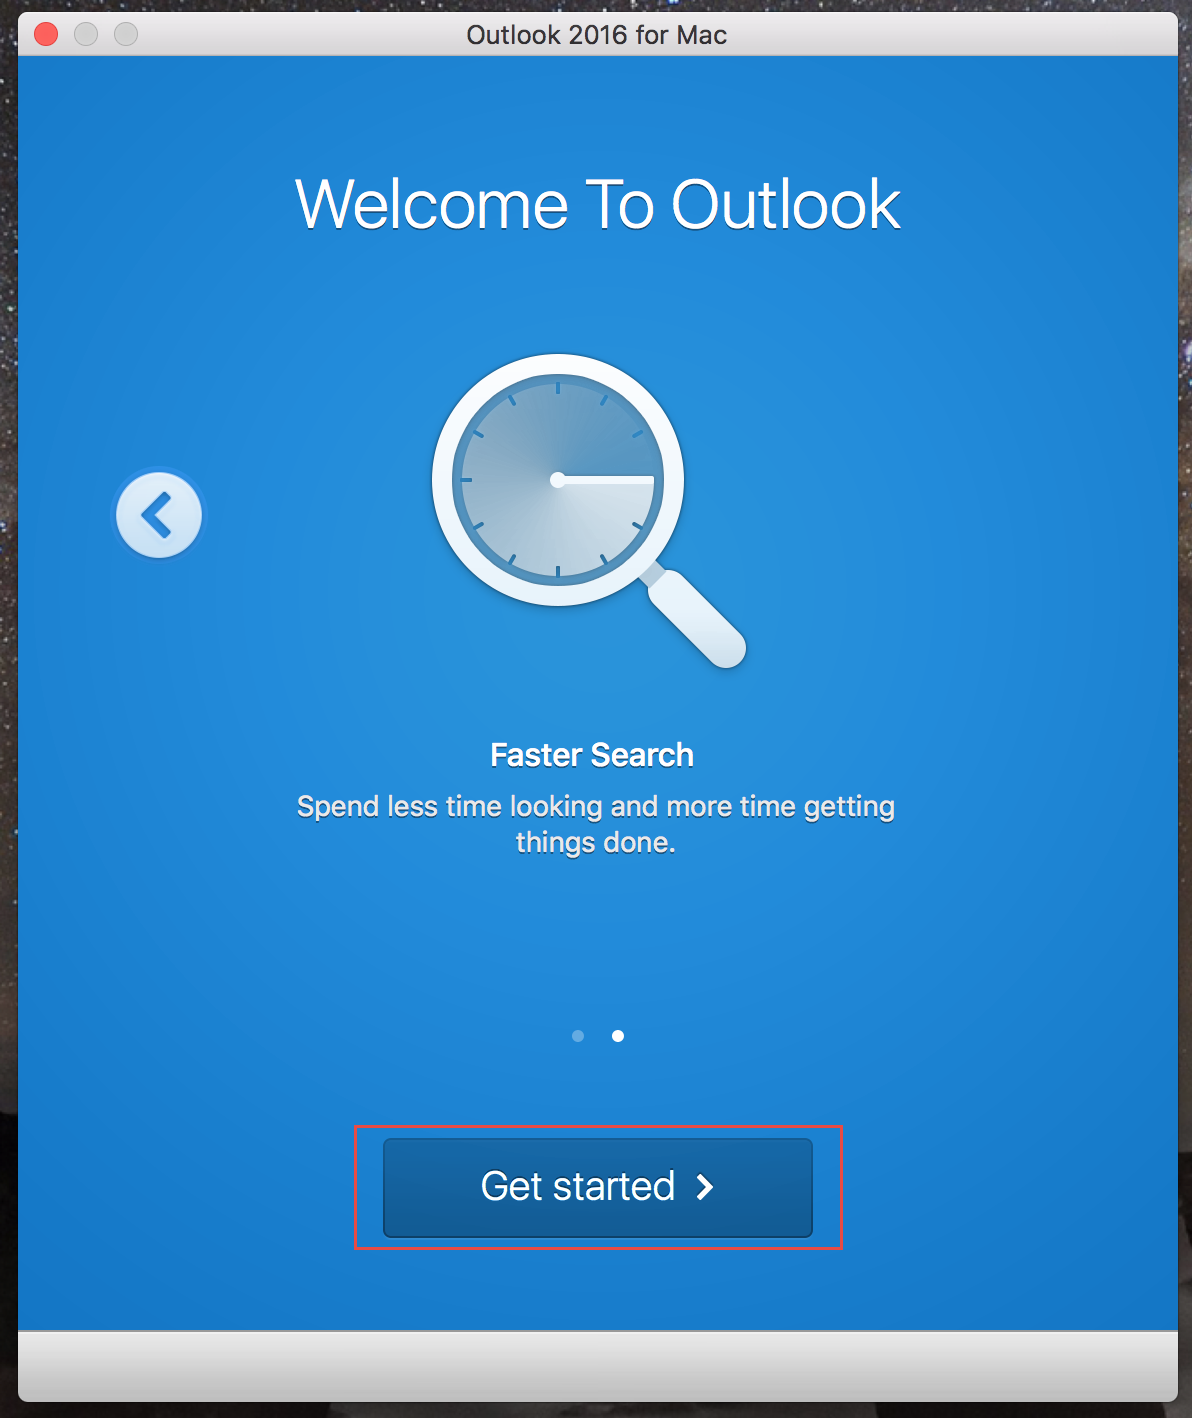 Outlook wizard - second screen